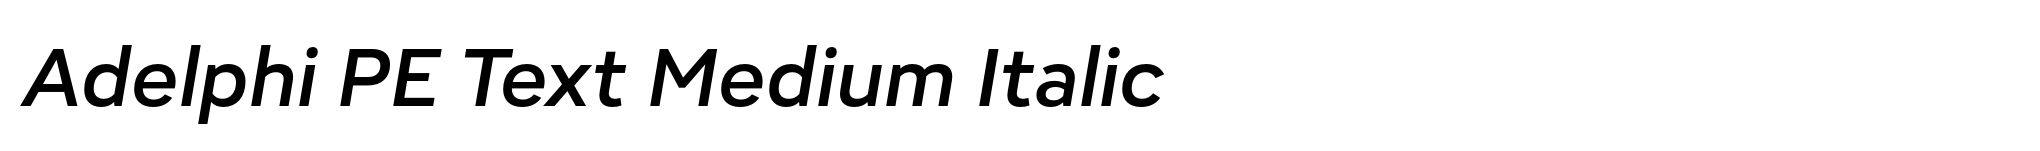 Adelphi PE Text Medium Italic image